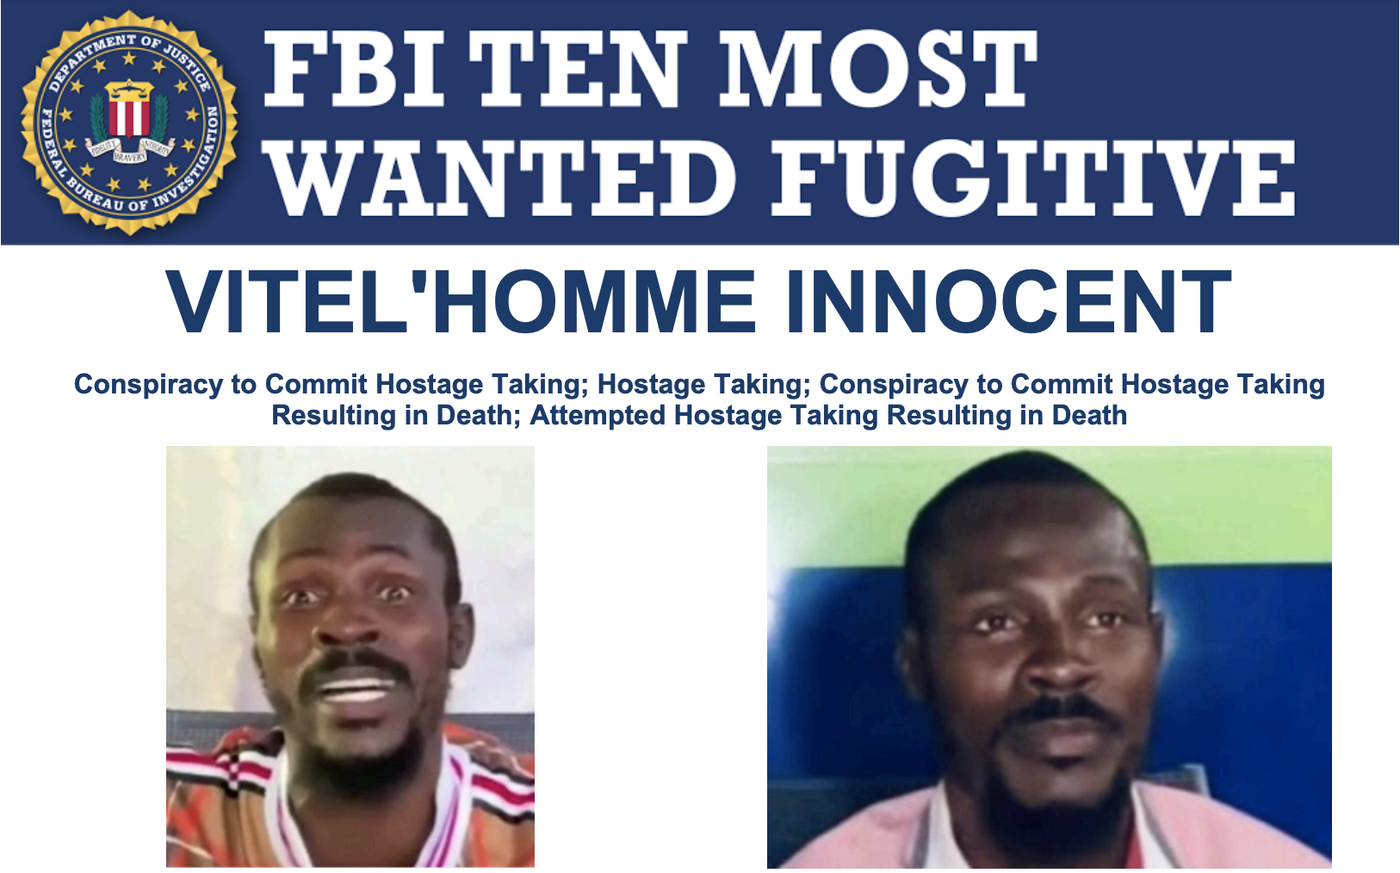 Ten Most Wanted Fugitive Vitel'Homme Innocent